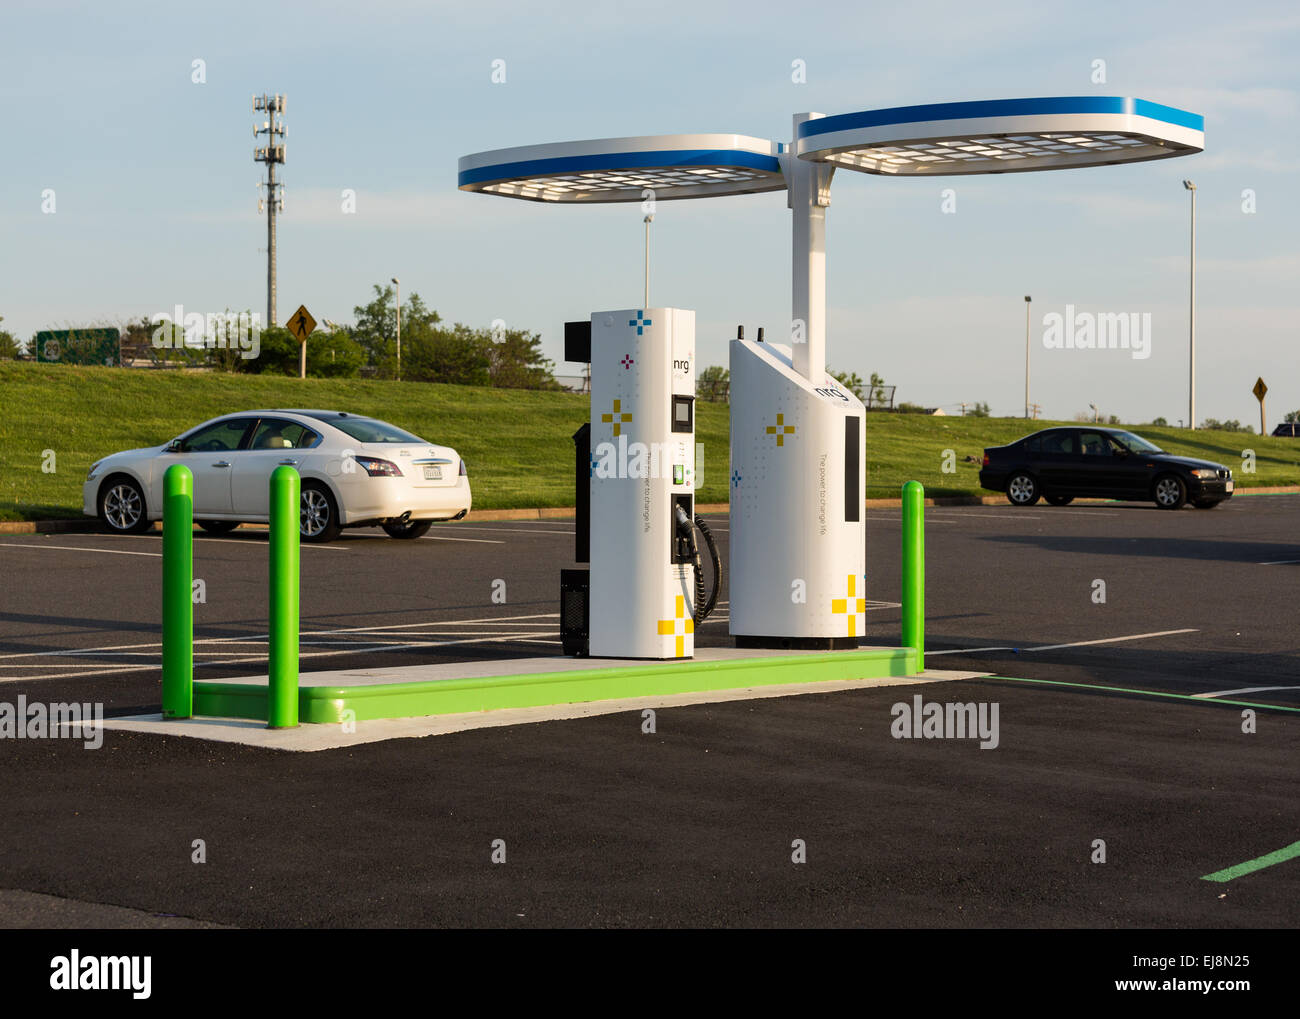 NRG EVGO charging station in USA Stock Photo